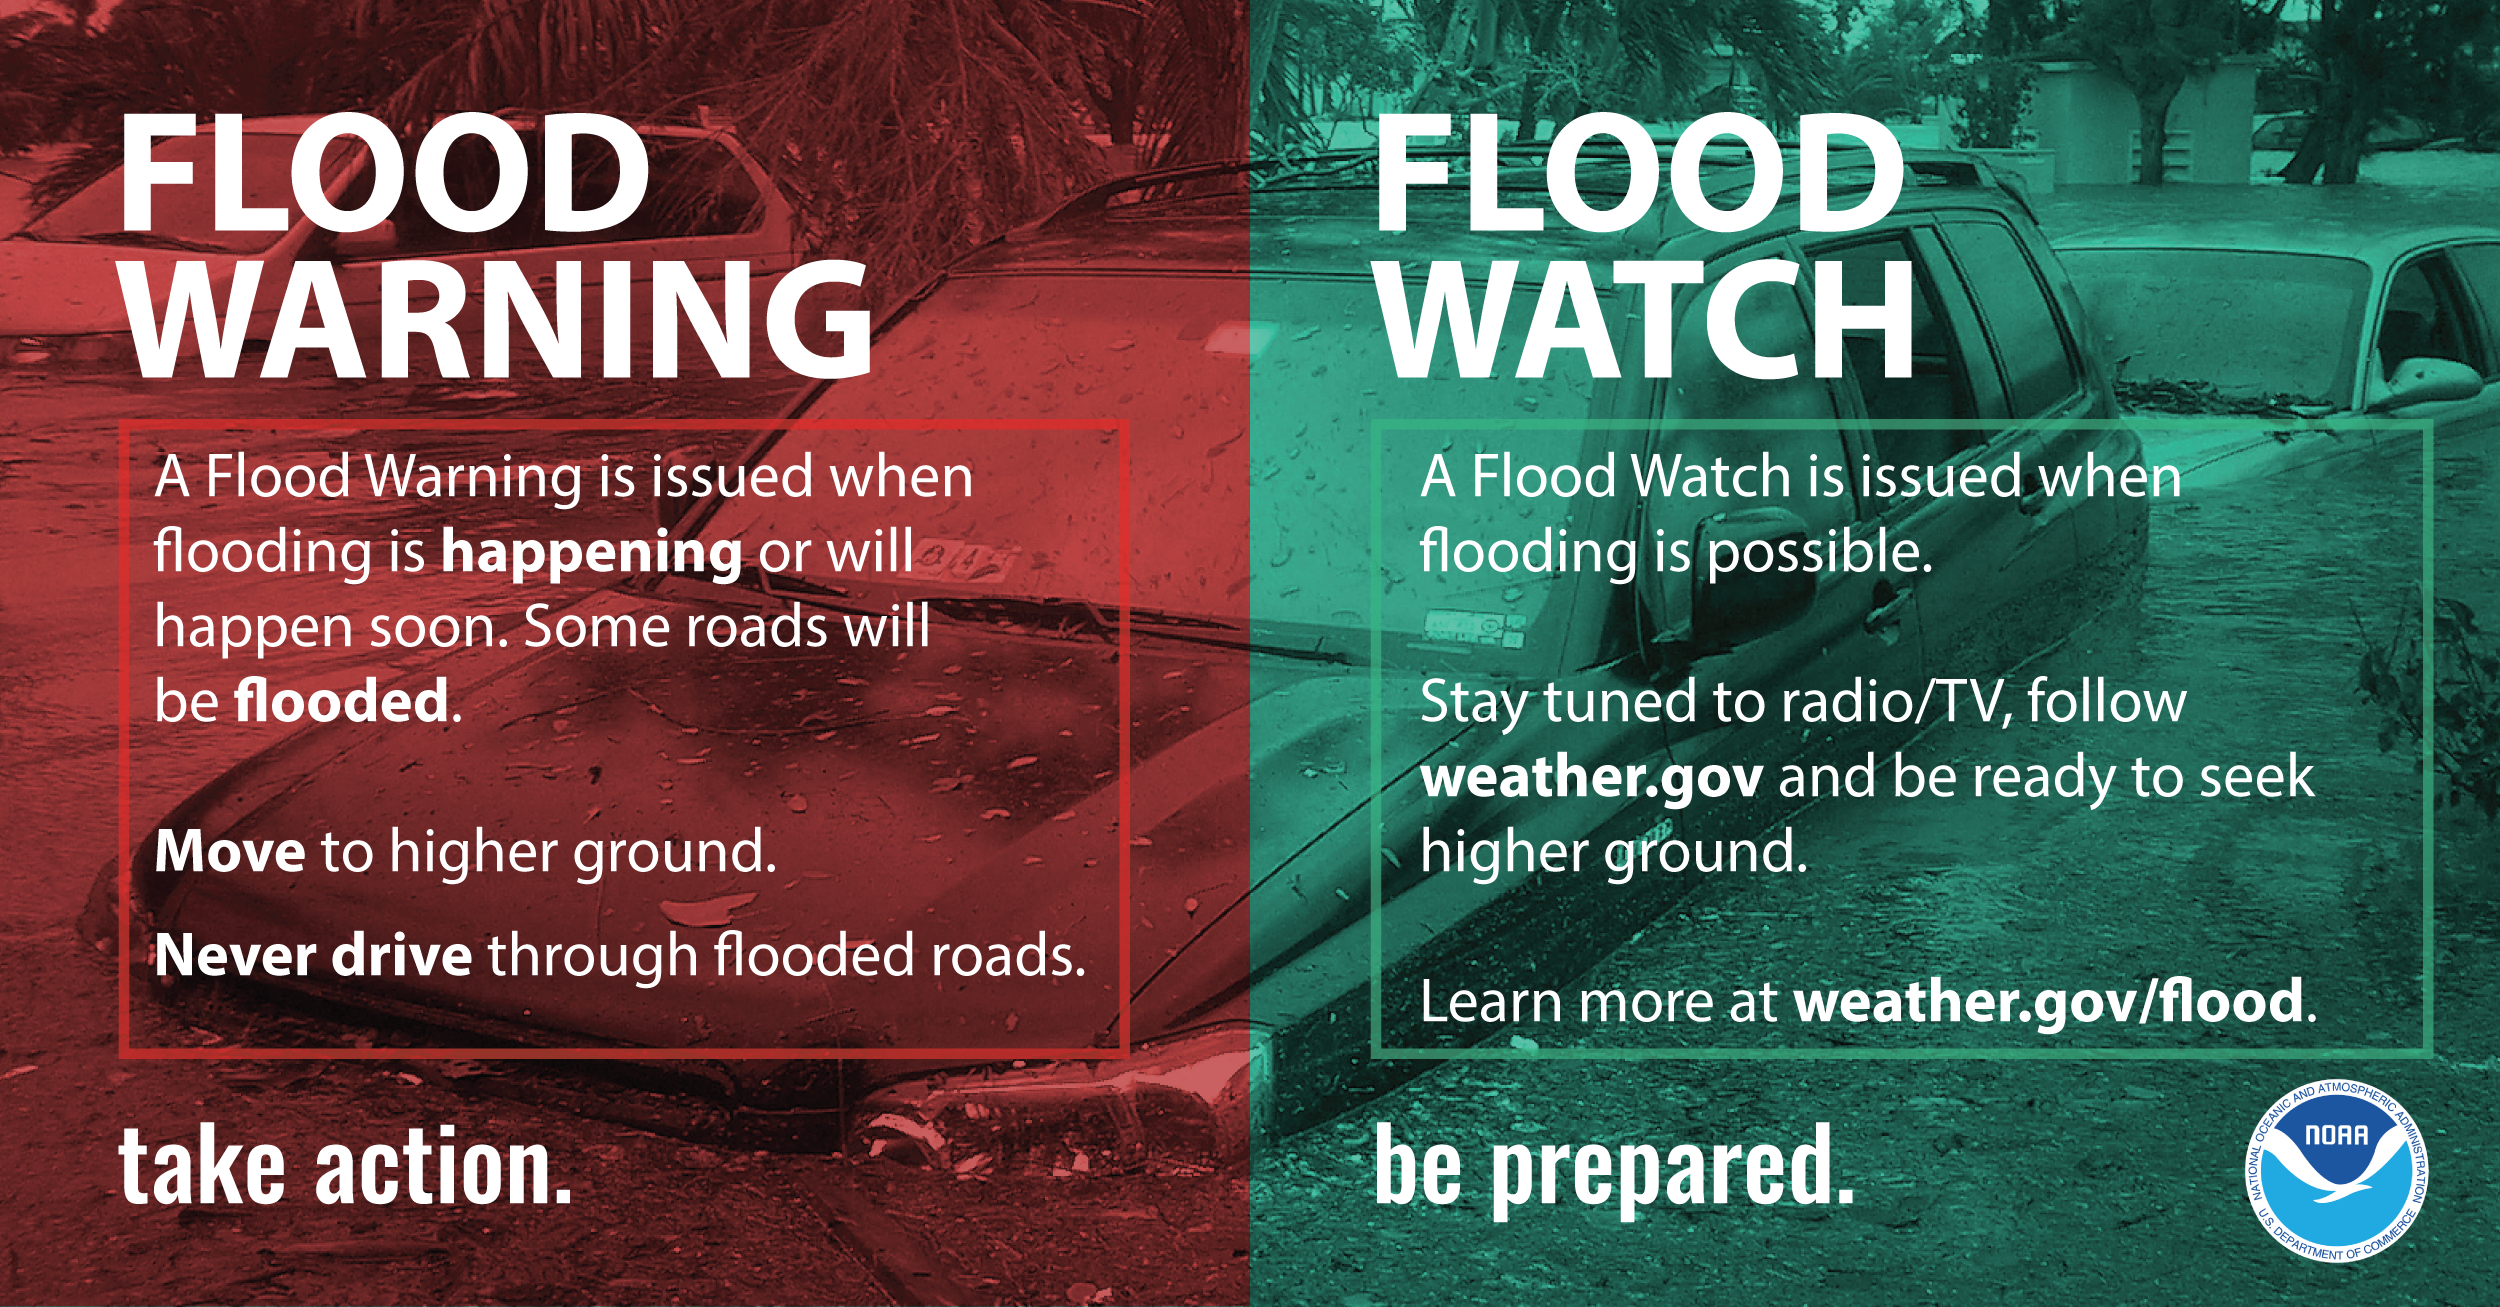 Flash Flood Watch vs Warning